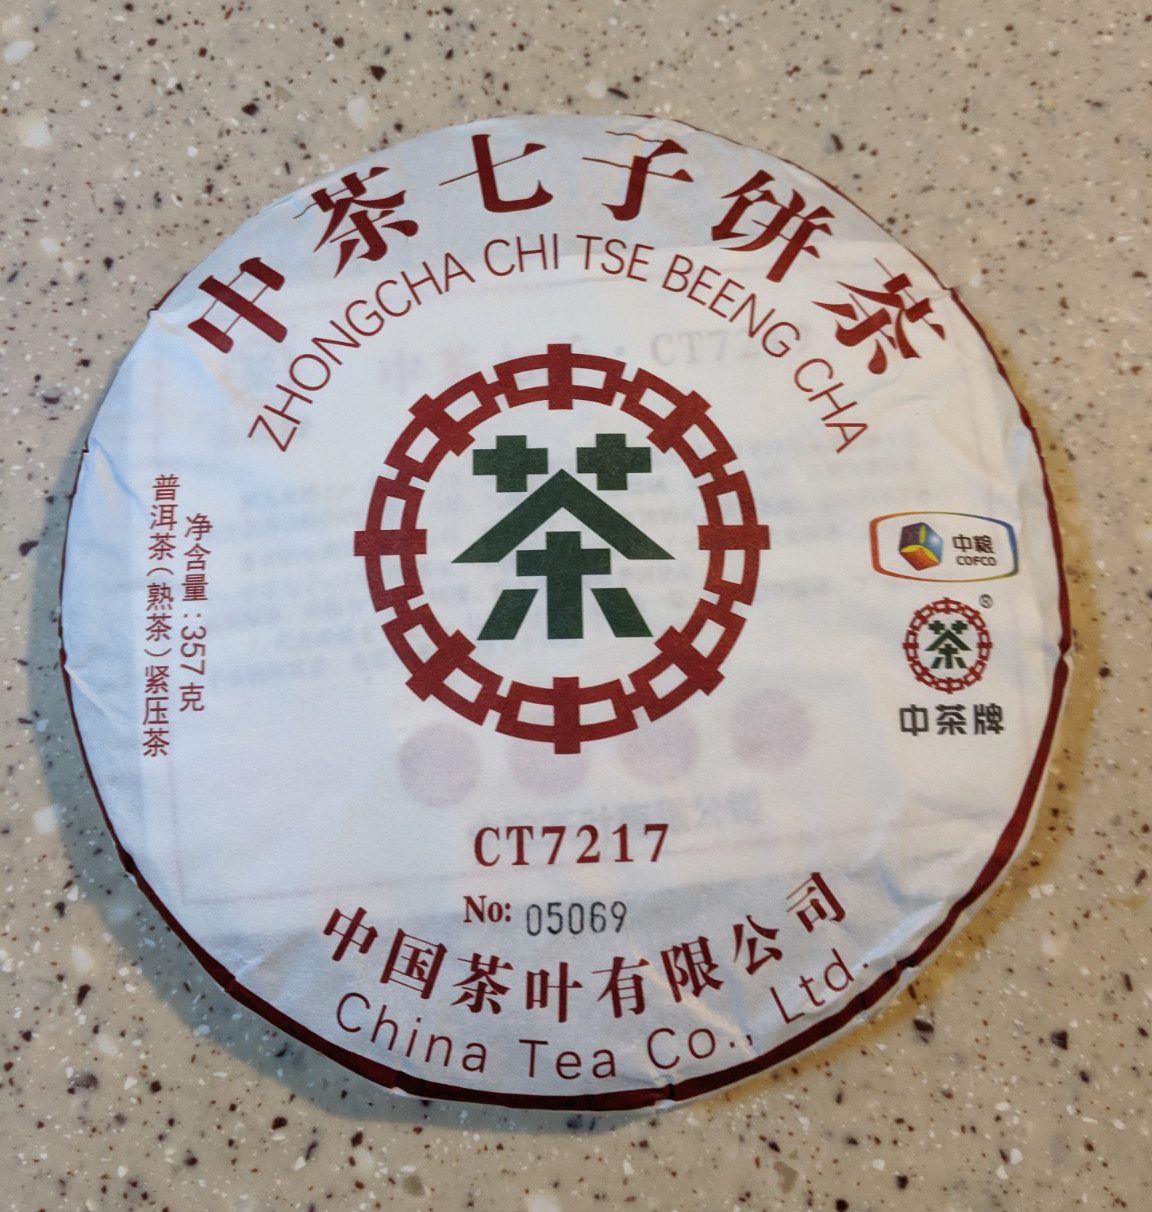 buying tea from taobao